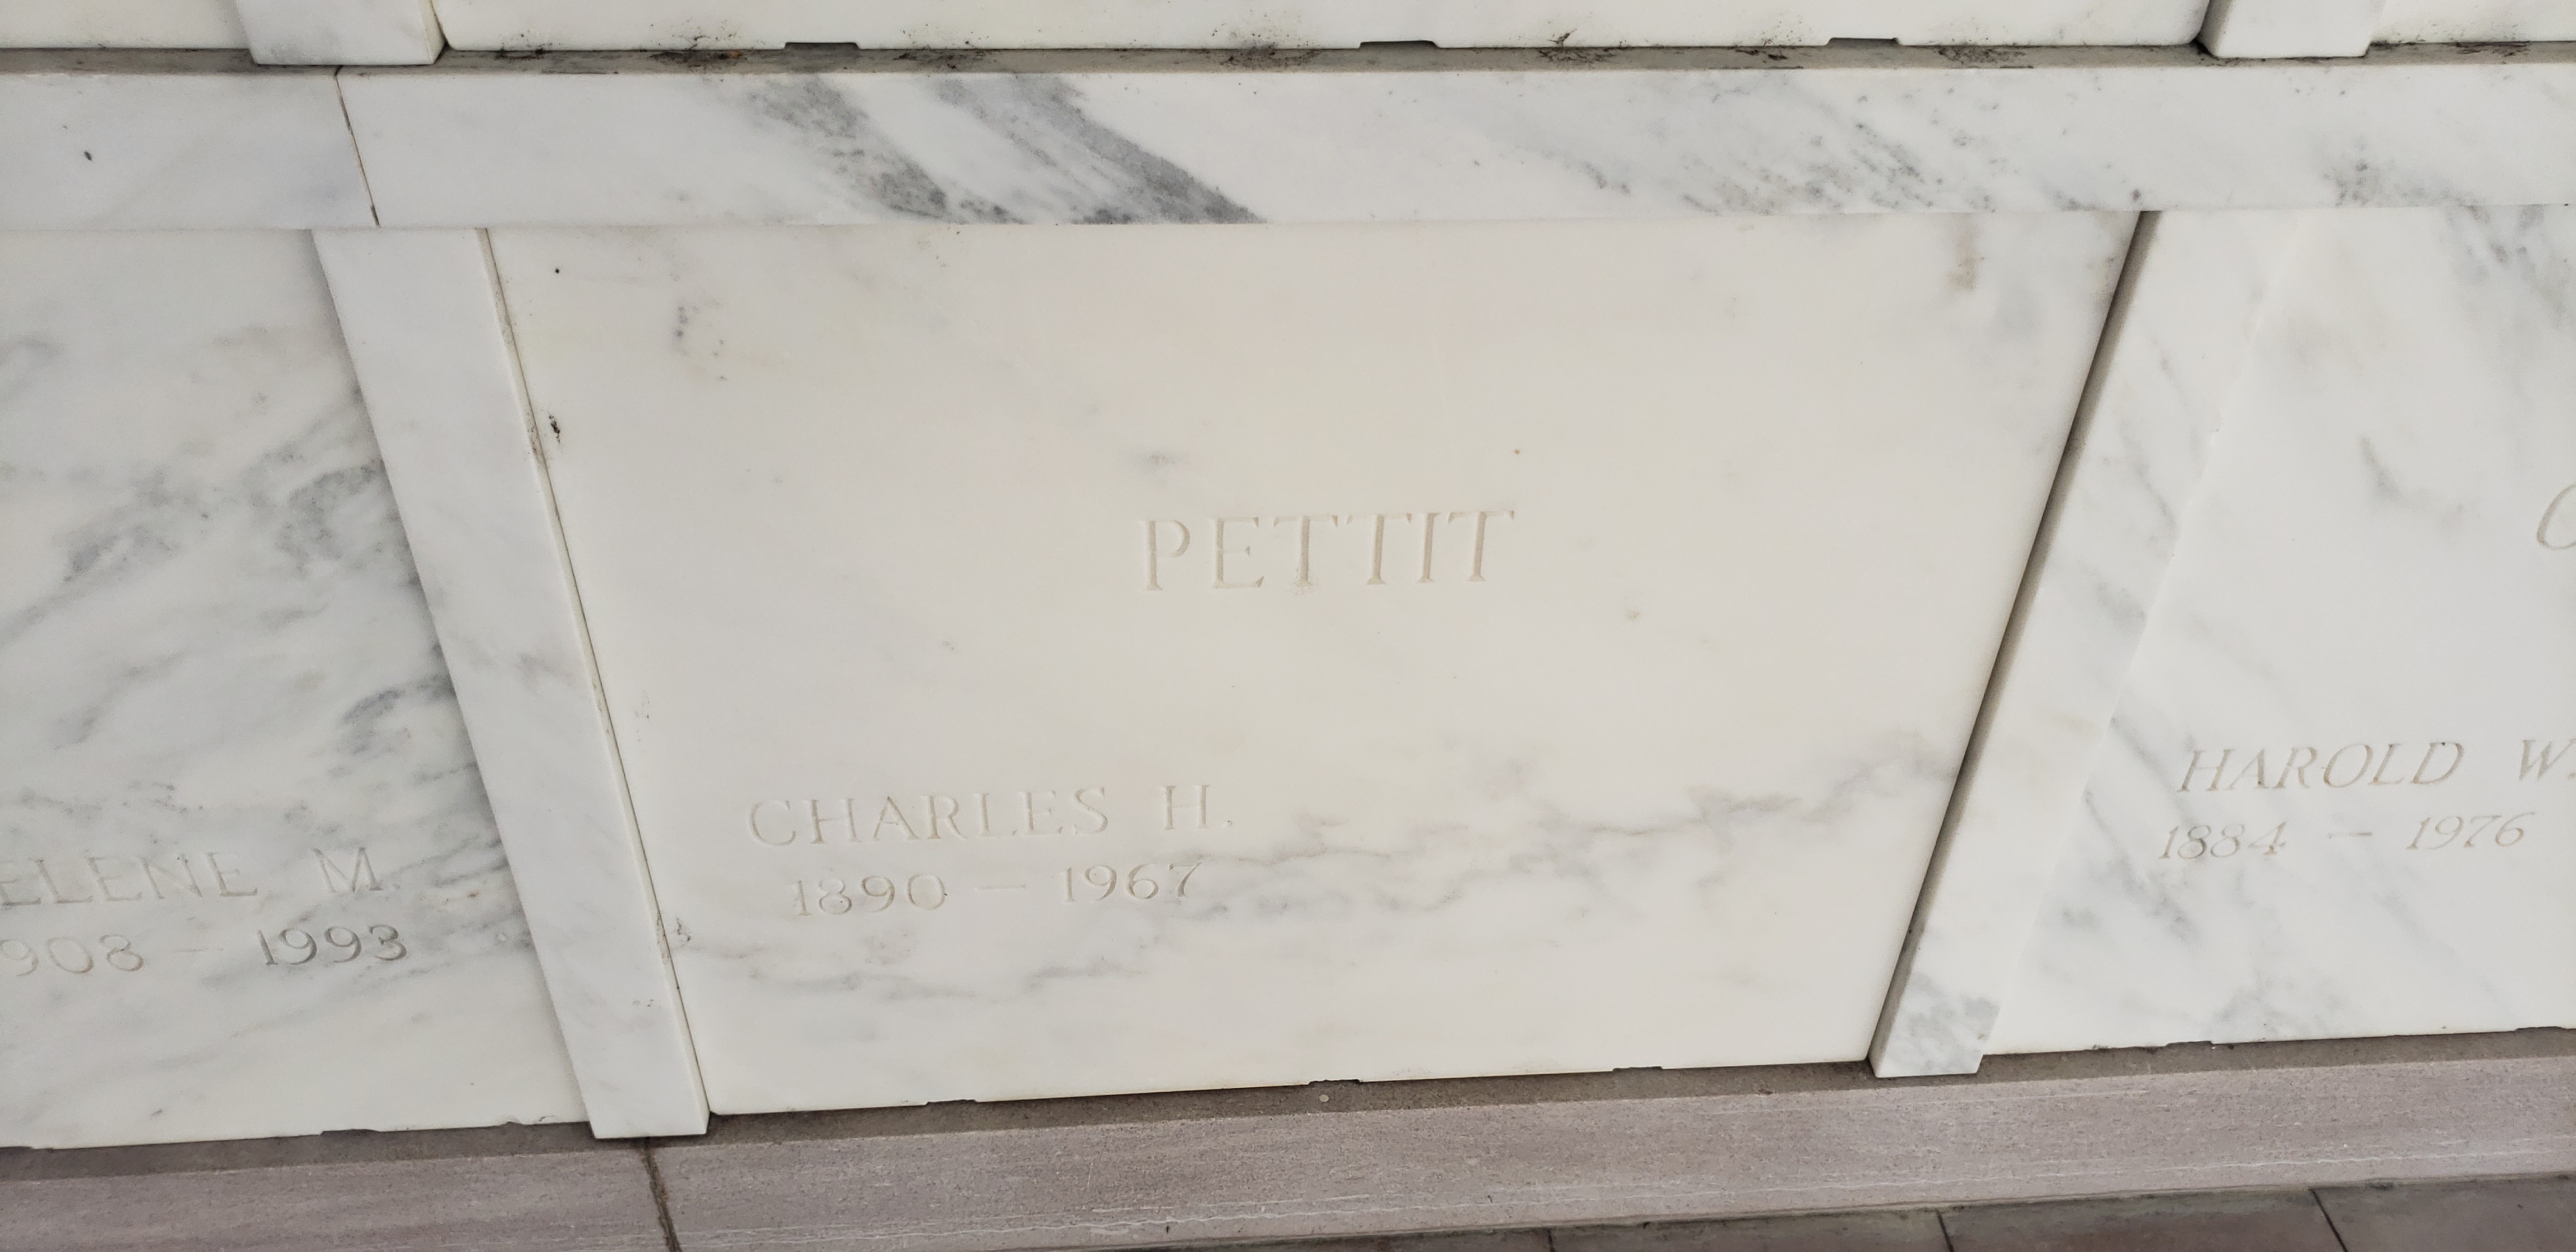 Charles H Pettit